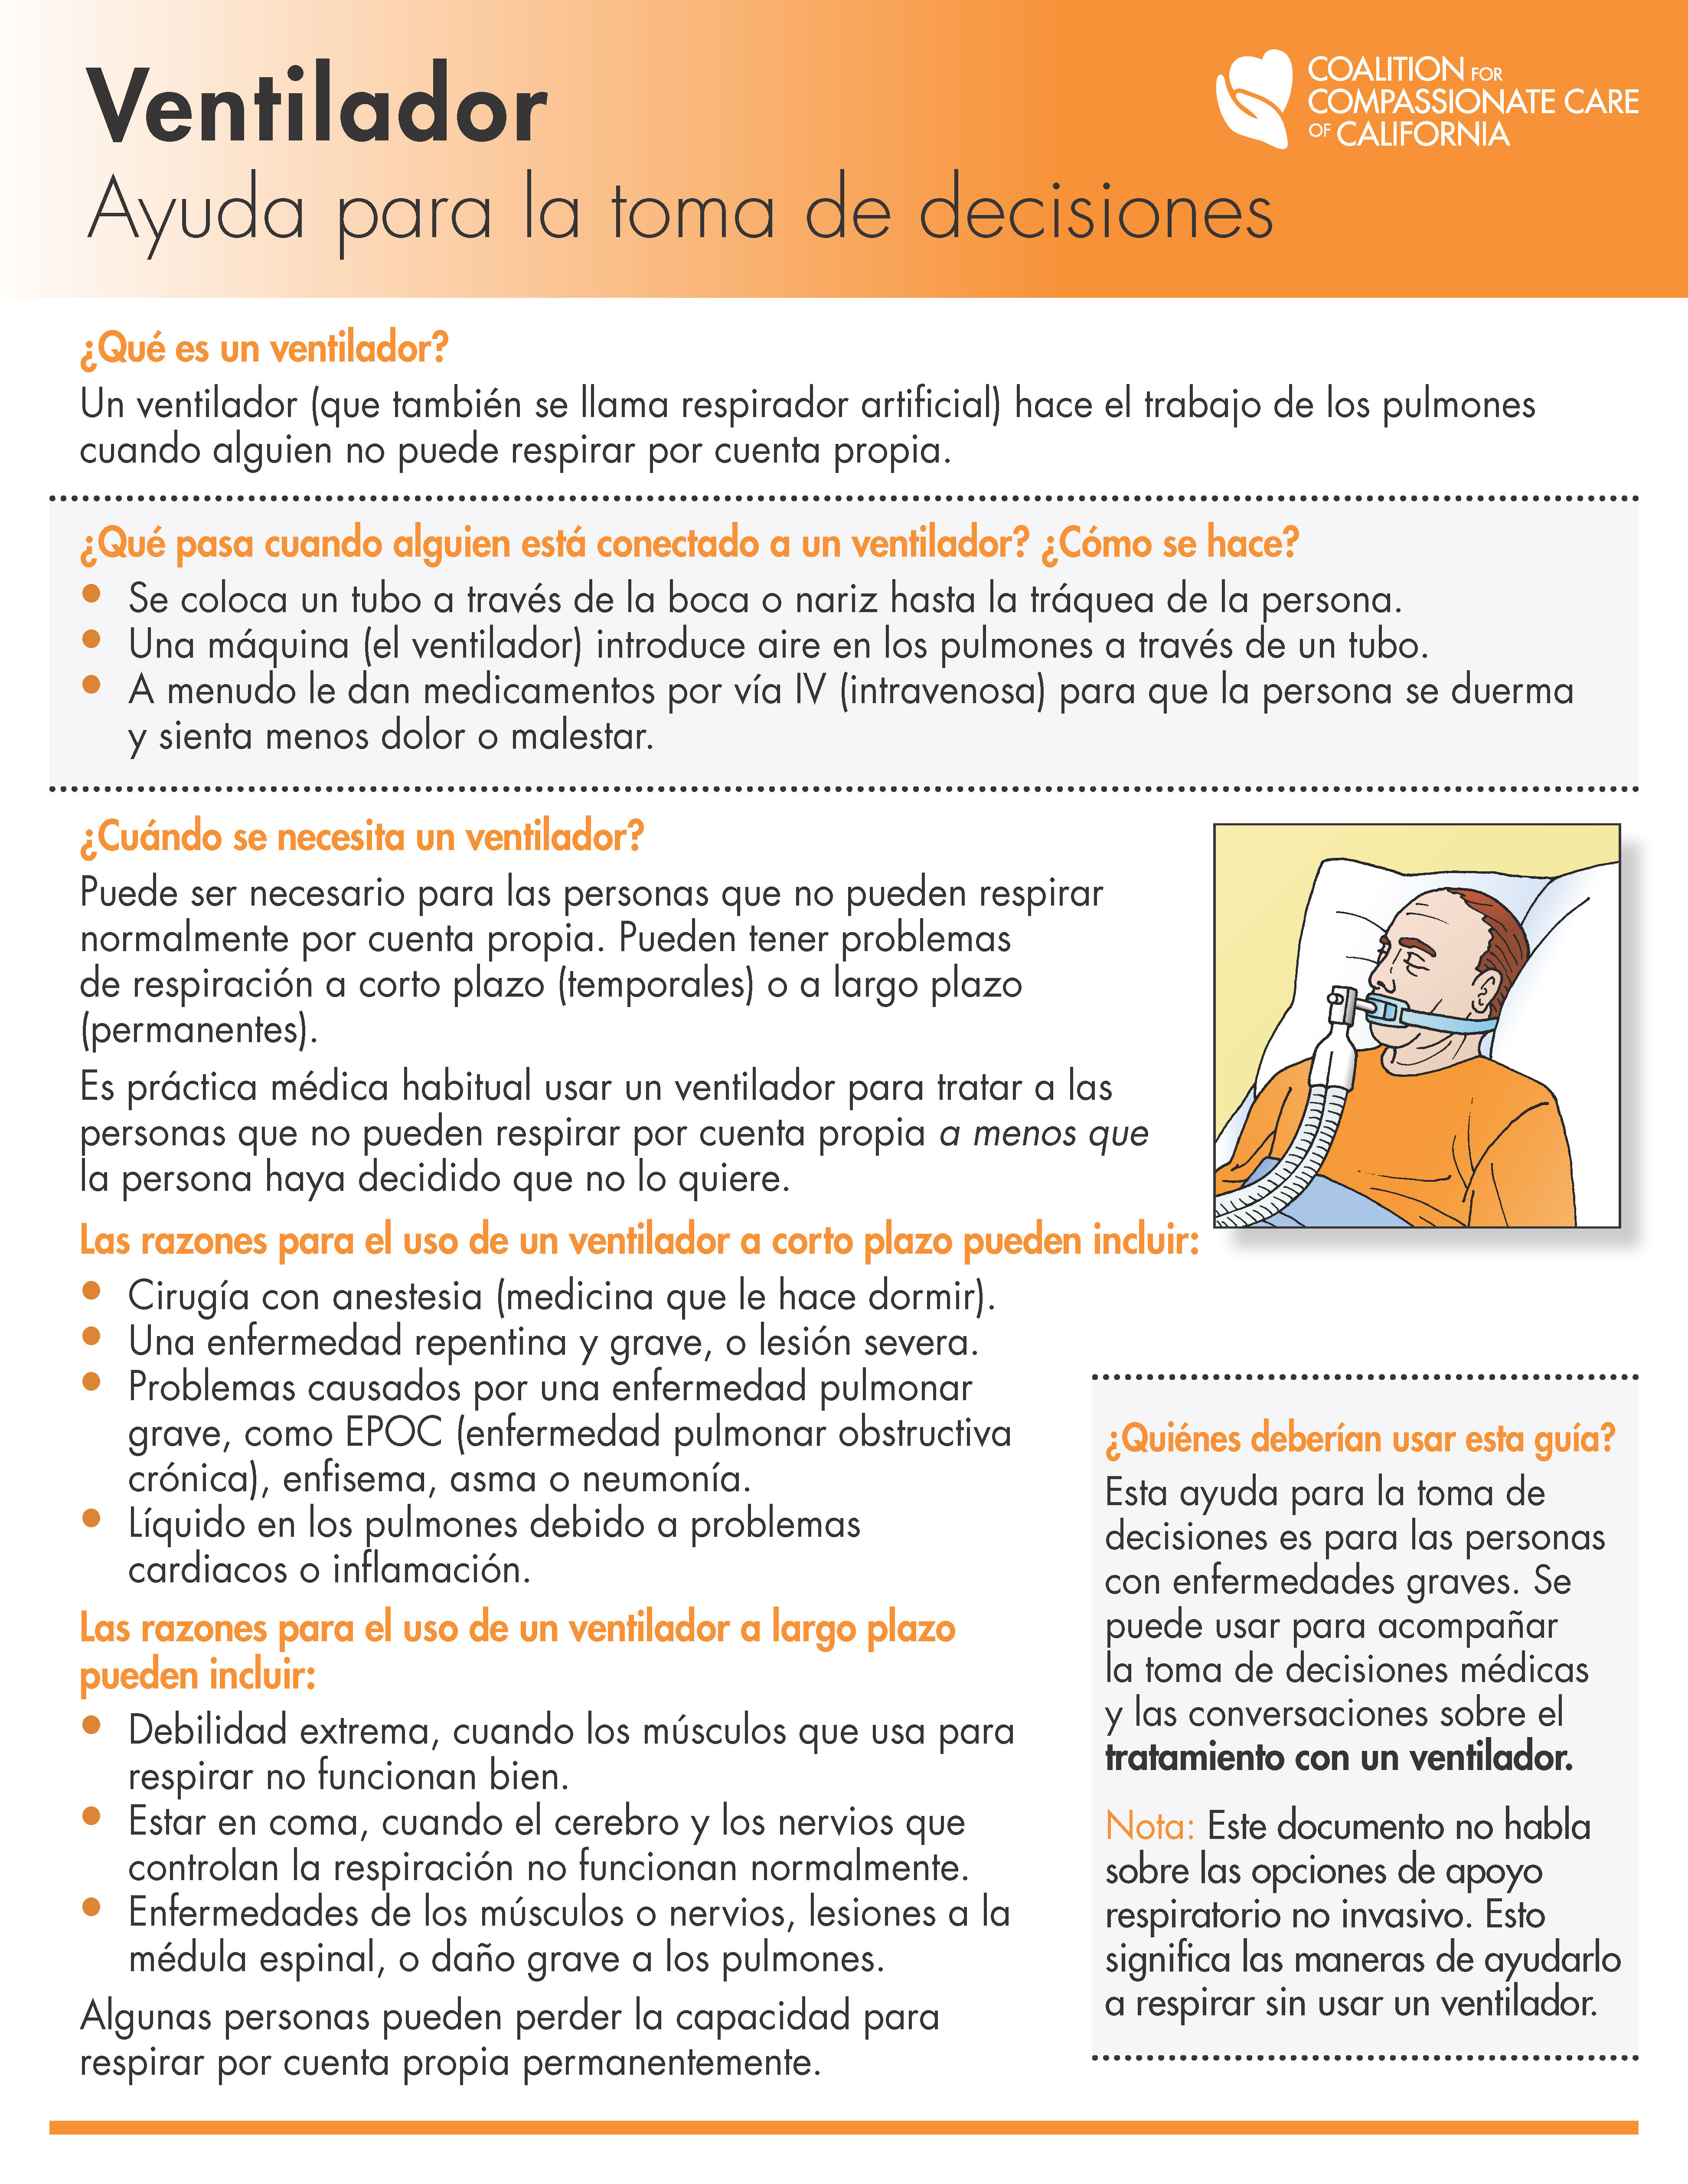 Decision Aid on Ventilator – Spanish